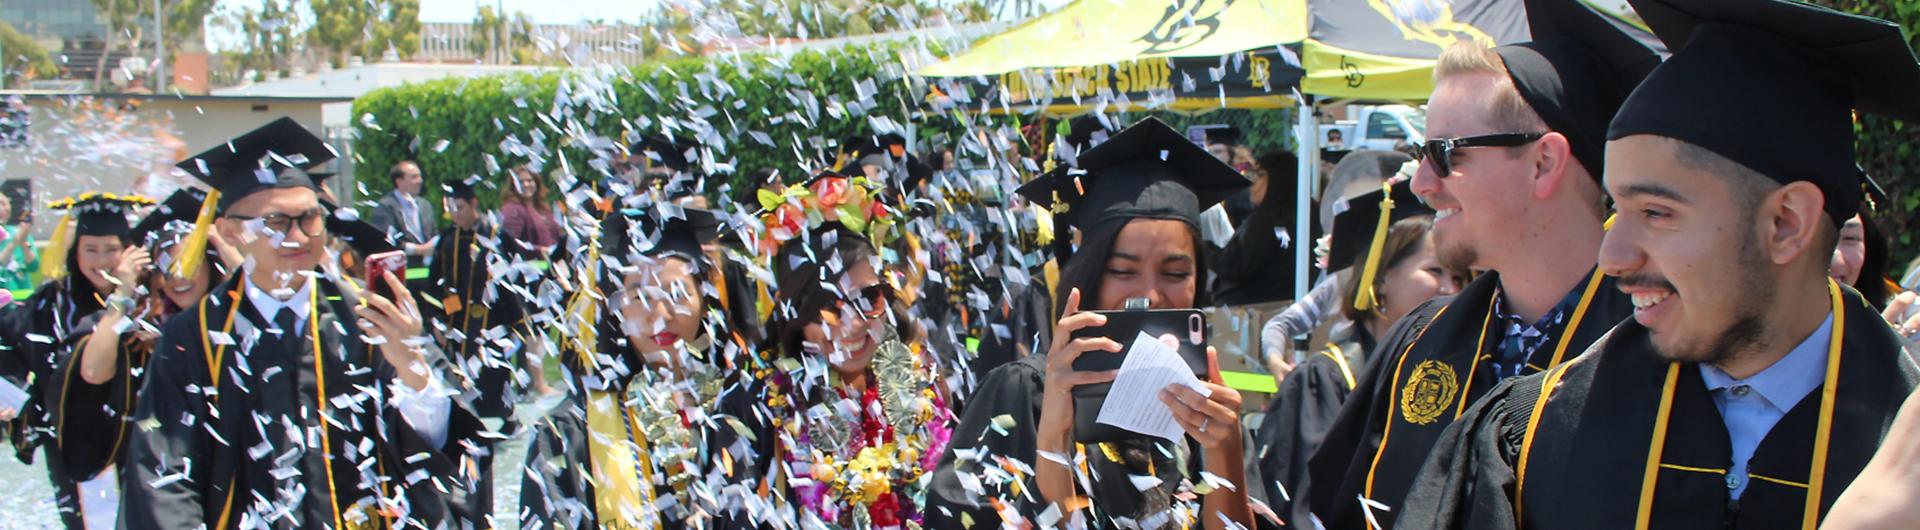 graduating students walking through confetti